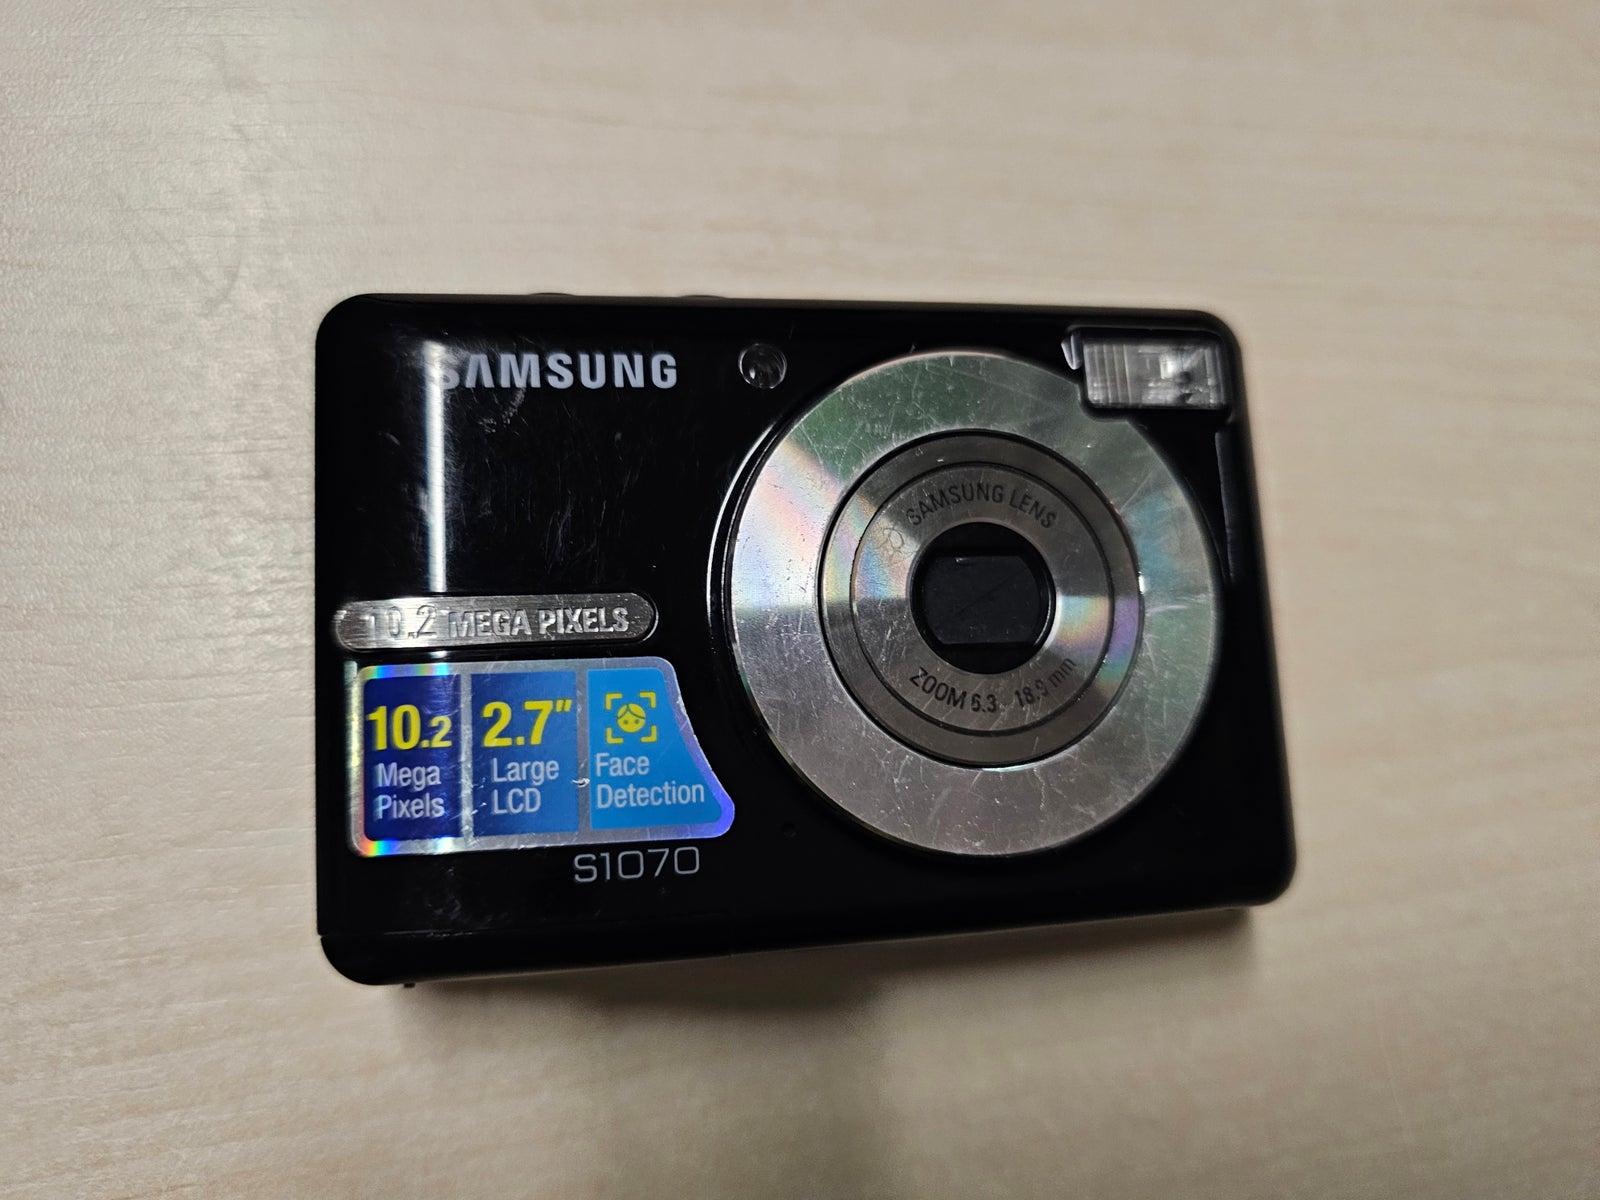 Samsung, S1070, 10.2 megapixels